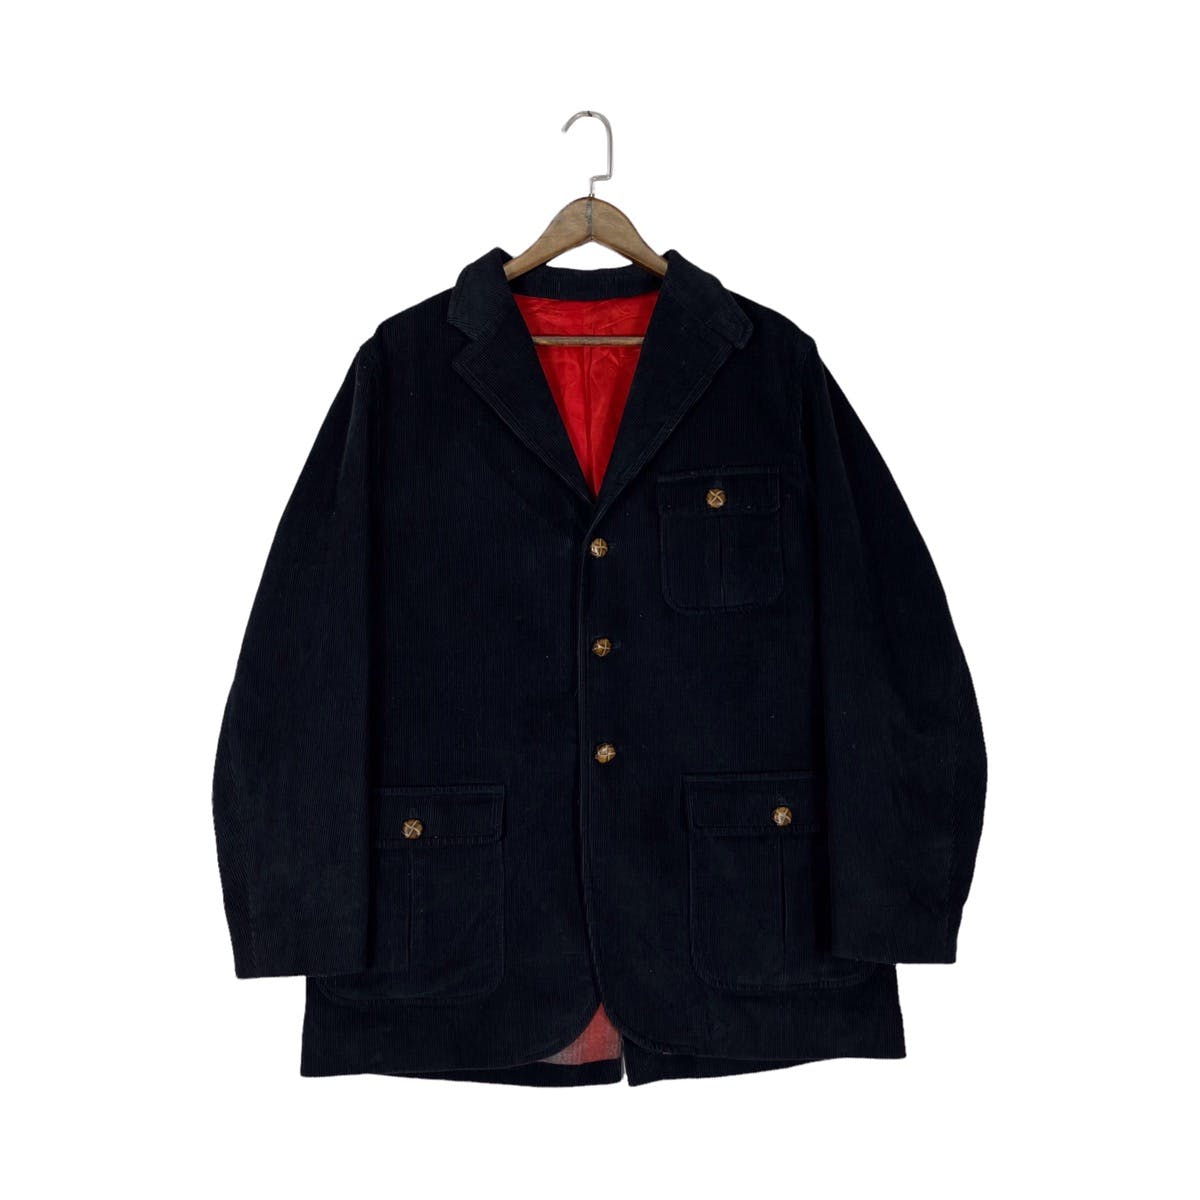 Vintage Lad Musician Corduroy Coat Jacket - 1